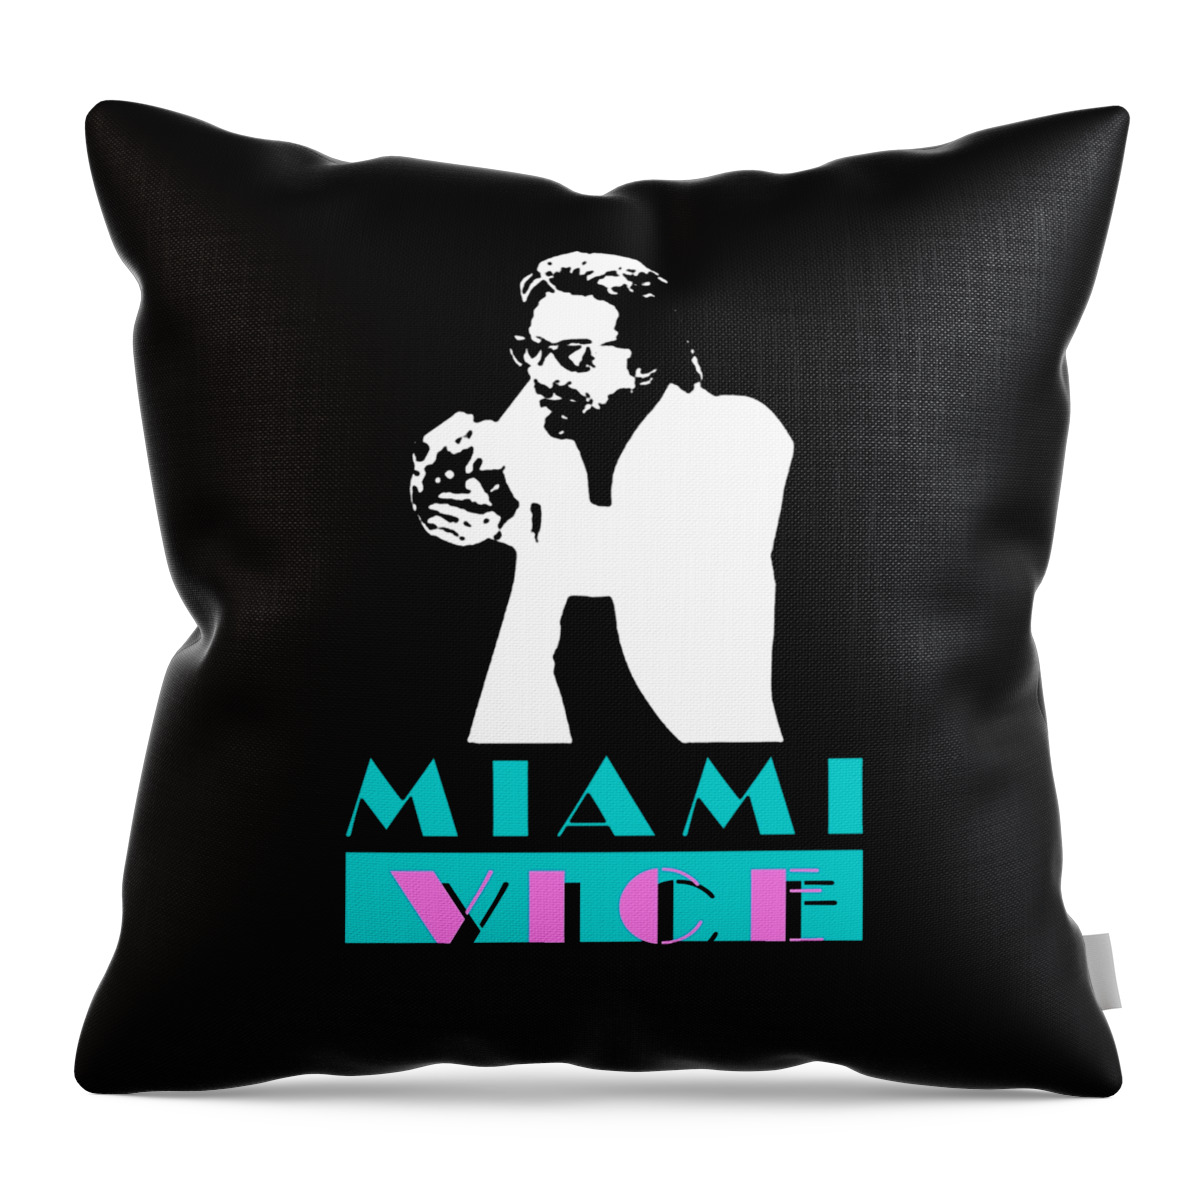 Miami Vice Throw Pillow featuring the digital art Detective Sonny by Bilskirobert